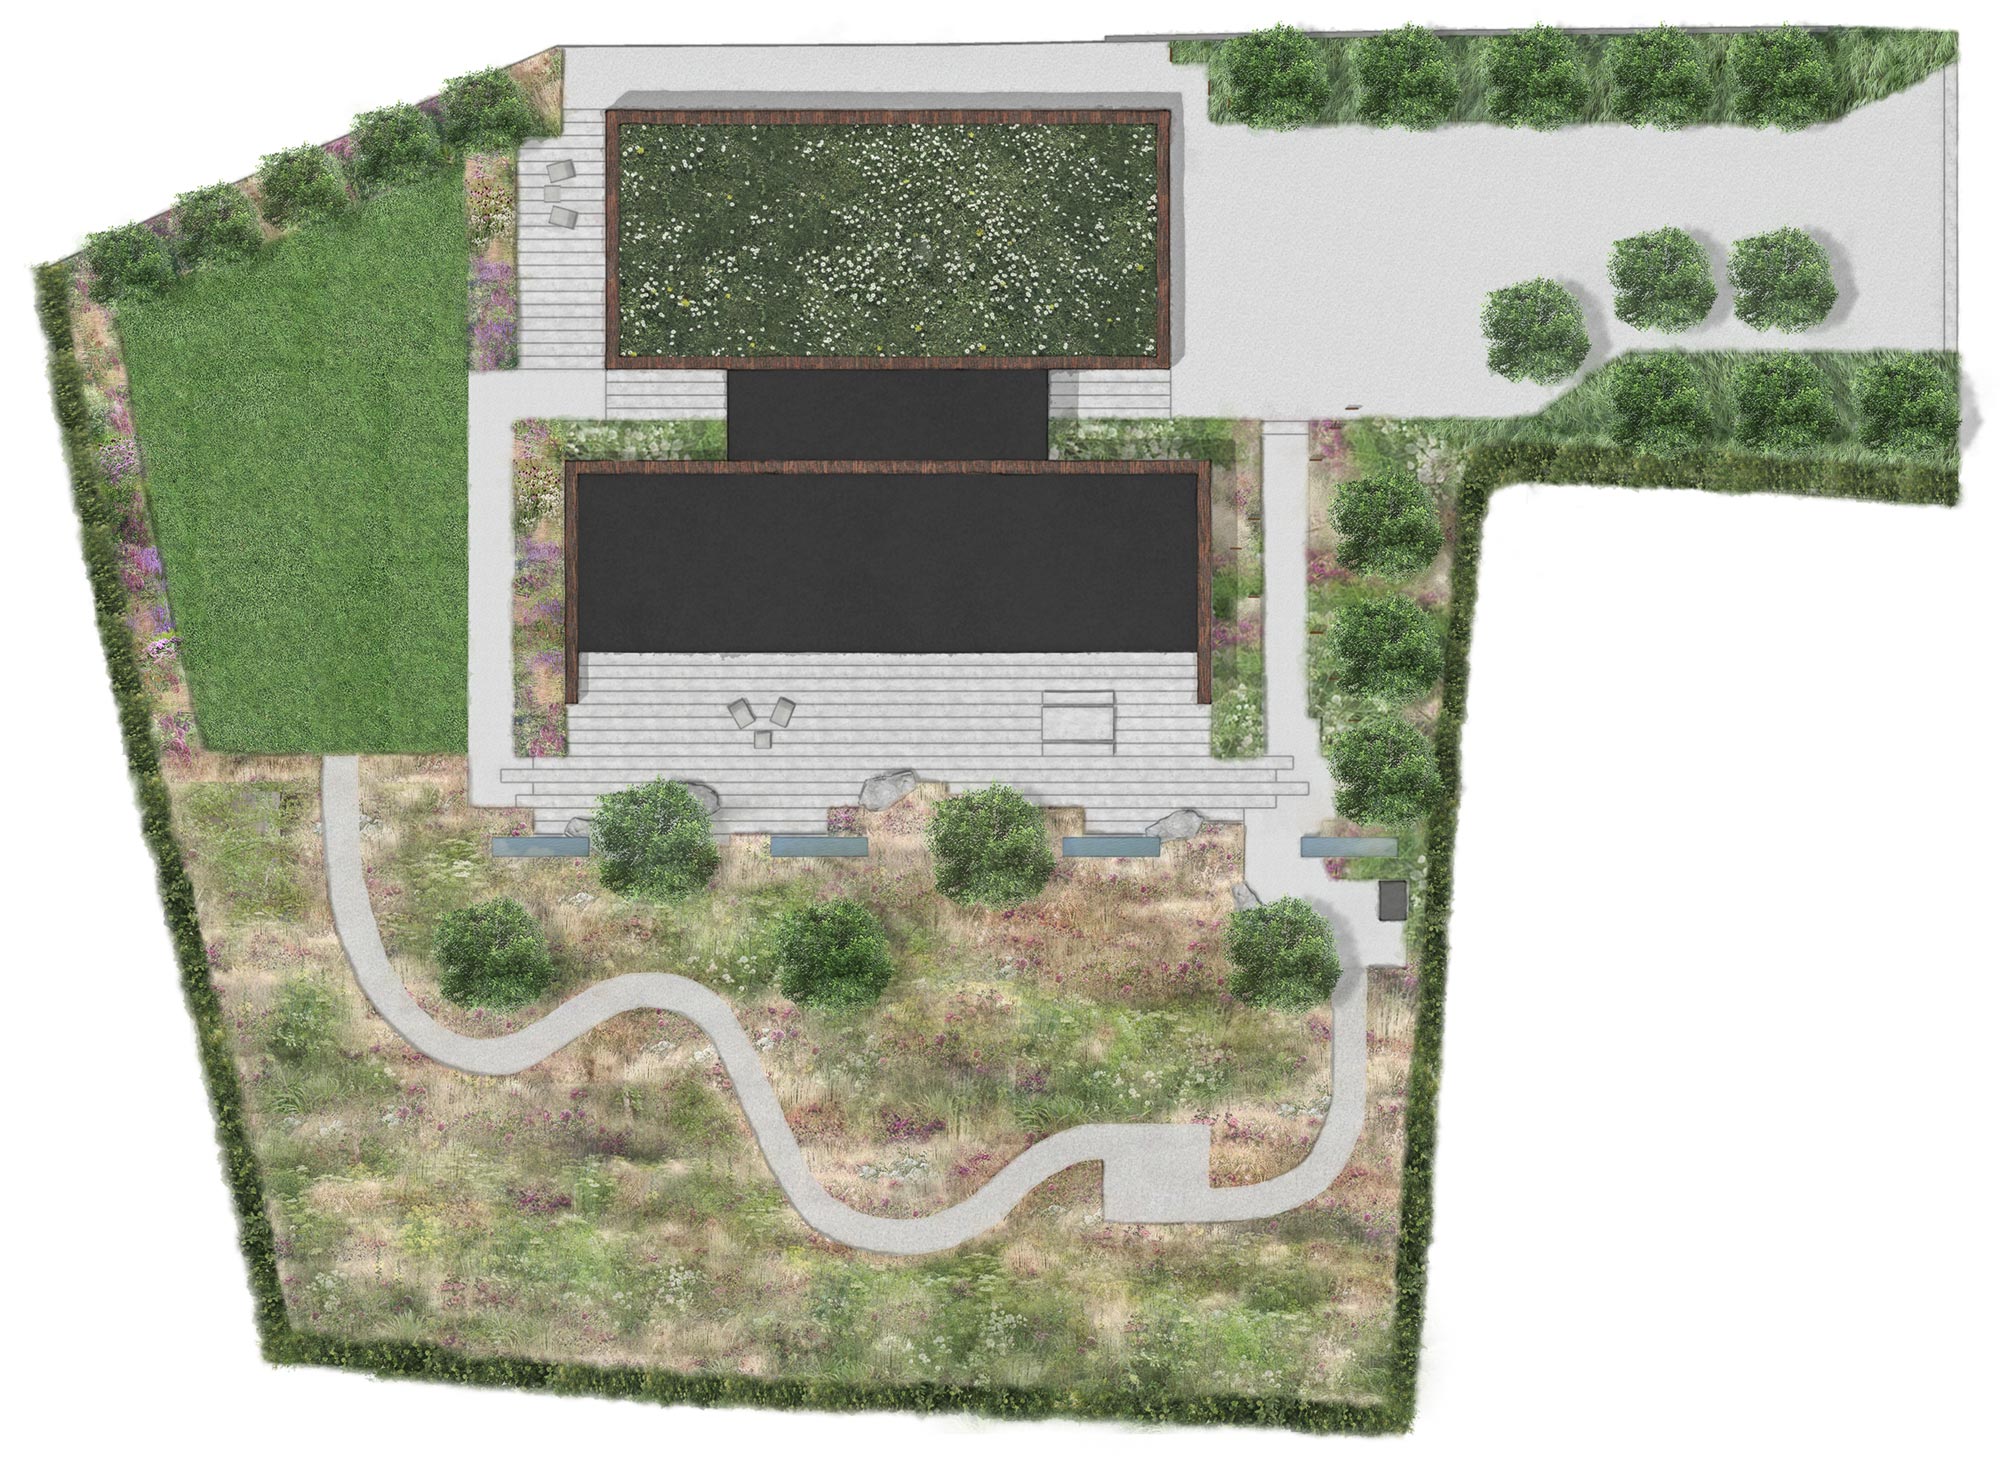 Colm Joseph Cambridgeshire garden designer modern garden design plan